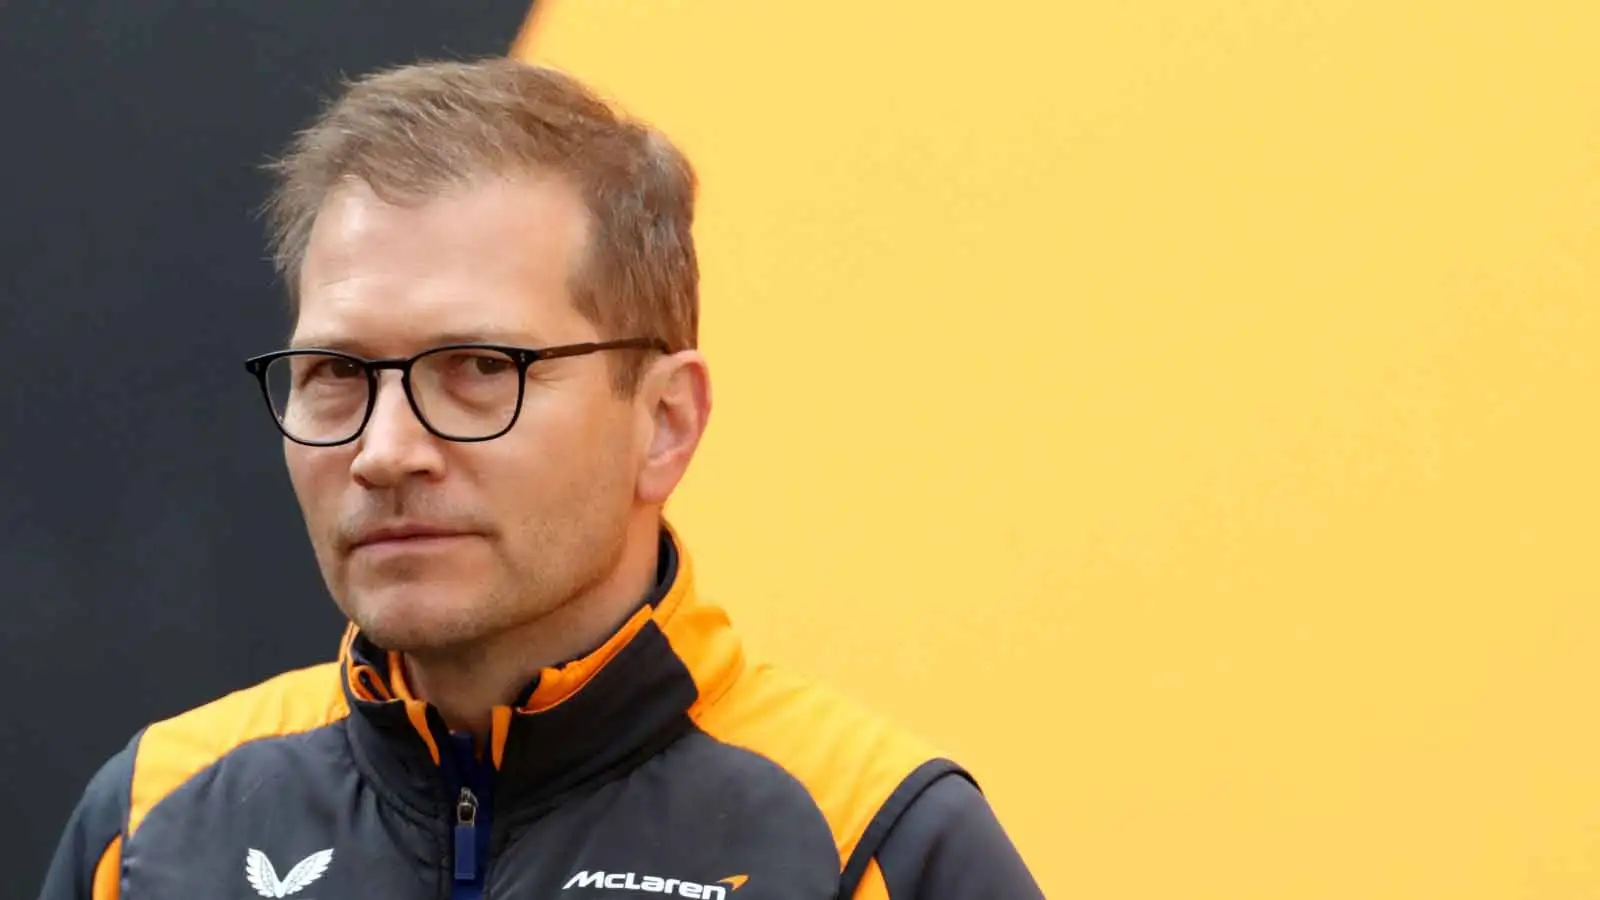 Andreas Seidl outside the McLaren motorhome. Austria July 2022.